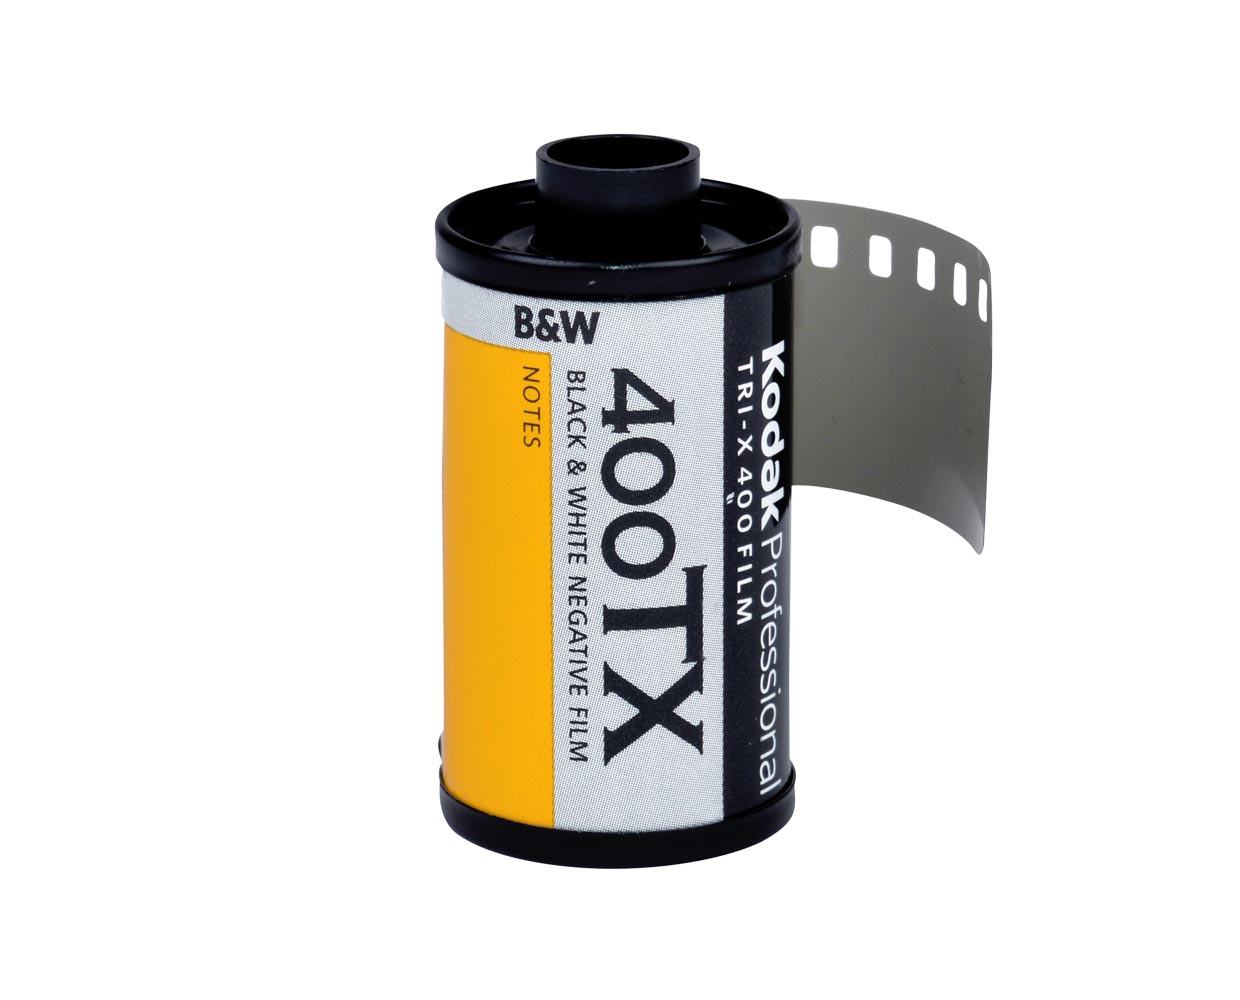 Pack de 5 pellicules Kodak Tri-X 400 iso Noir et Blanc 120 - Pellicule -  Achat & prix